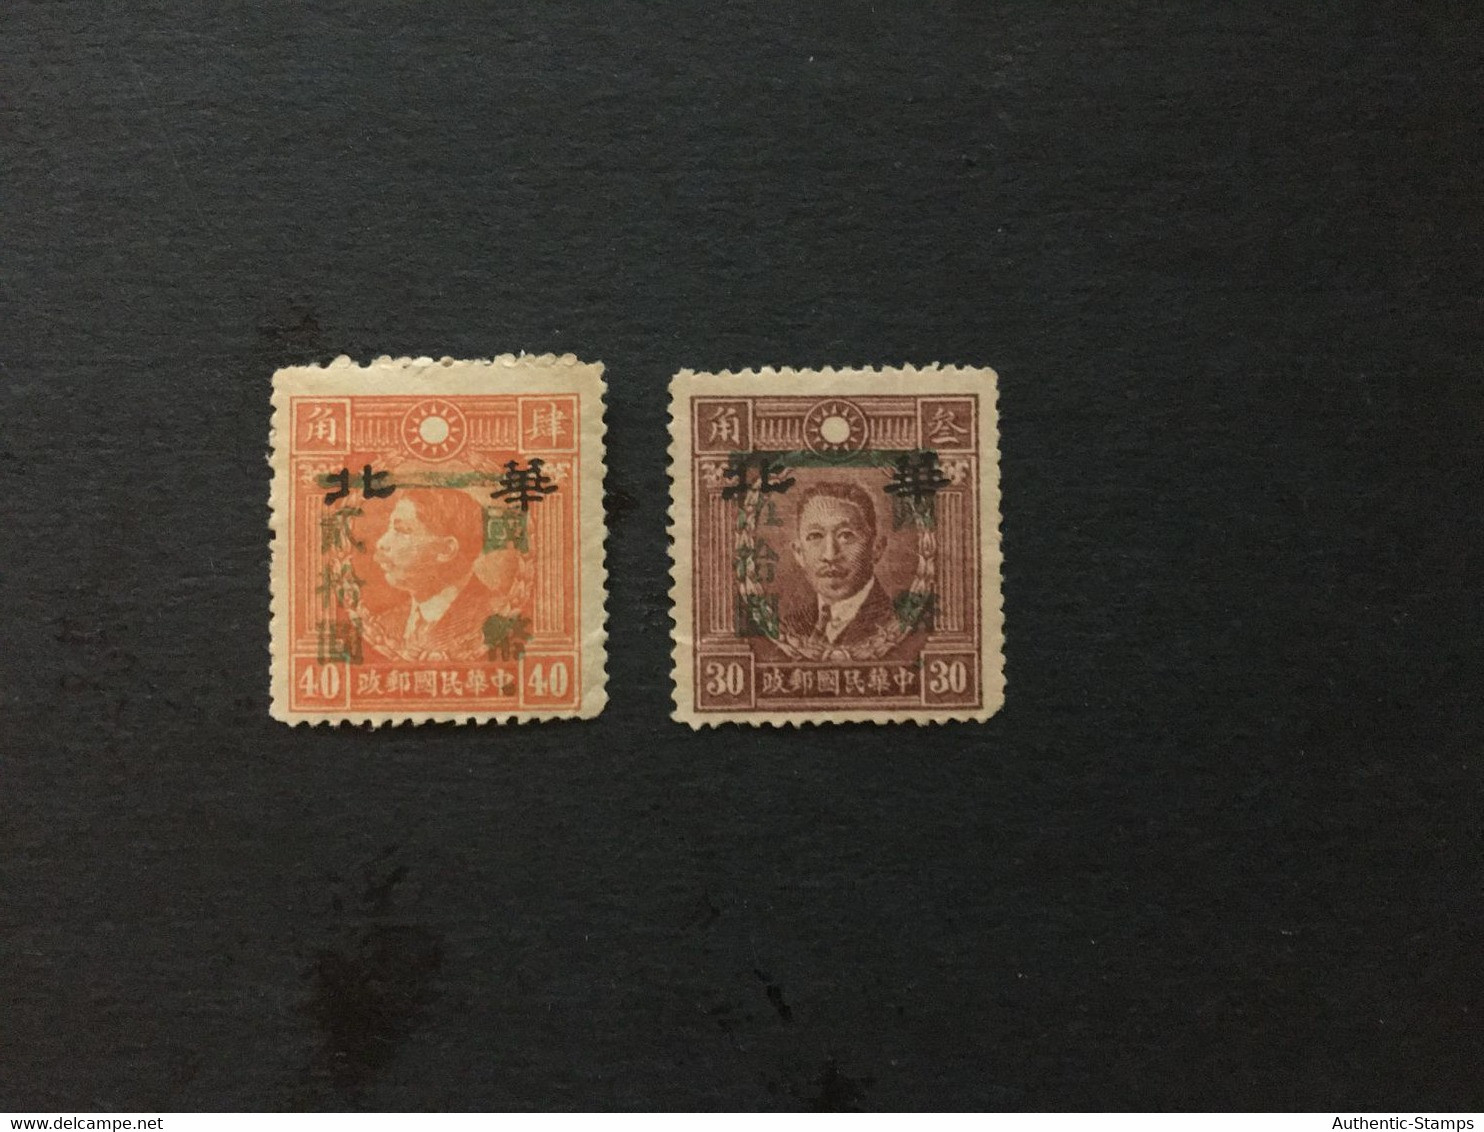 CHINA Local Stamp SET, Unused, RARE OVERPRINT, Japanese OCCUPATION, CINA, CHINE,  LIST 263 - 1941-45 Chine Du Nord